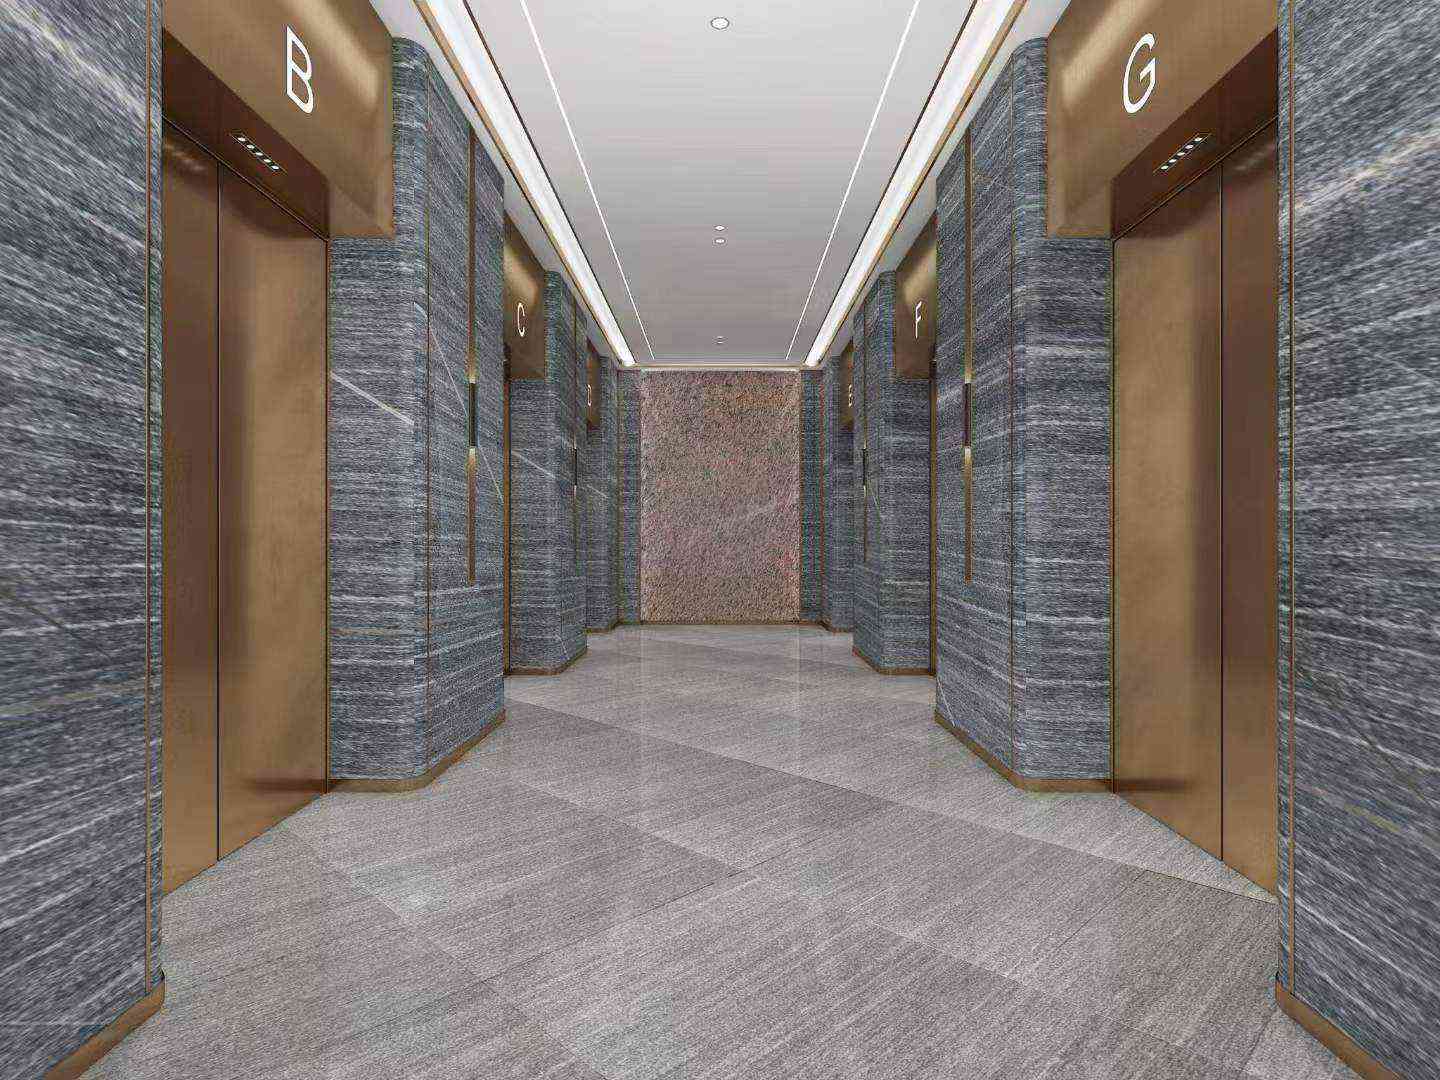 Hotel Corridor Wall Cladding Tiles by Polished China Viscount Grey Granite